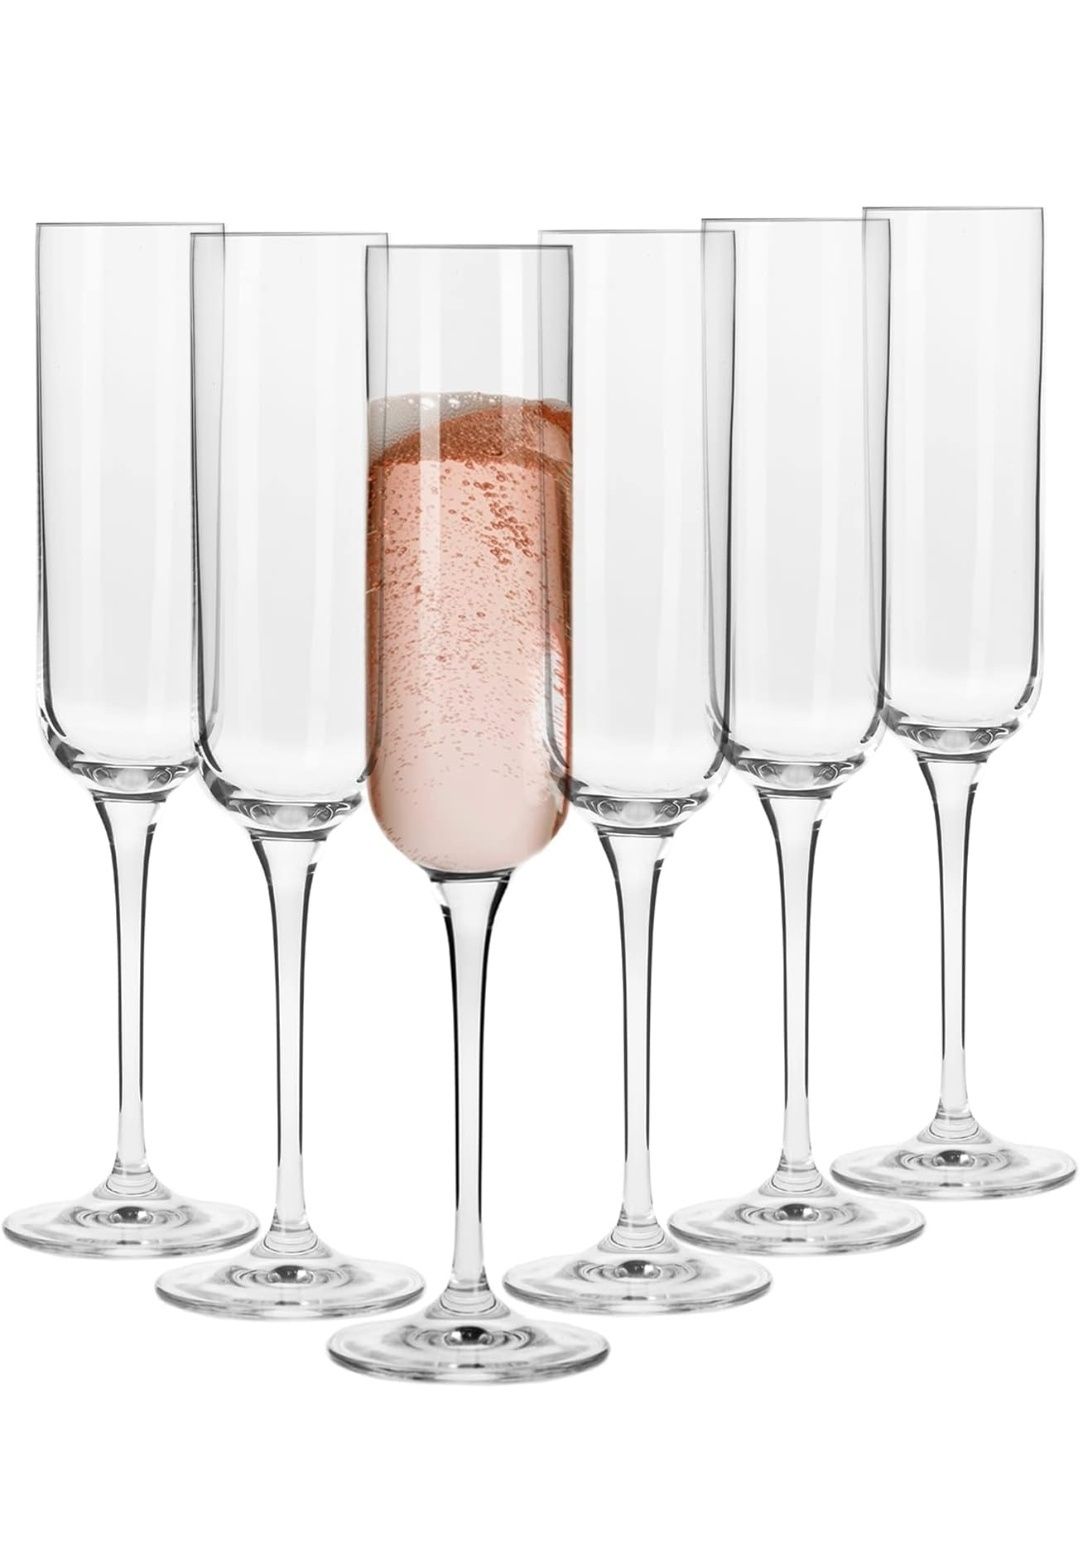 Kieliszki do szampana 170ml GLAMOUR | KROSNO